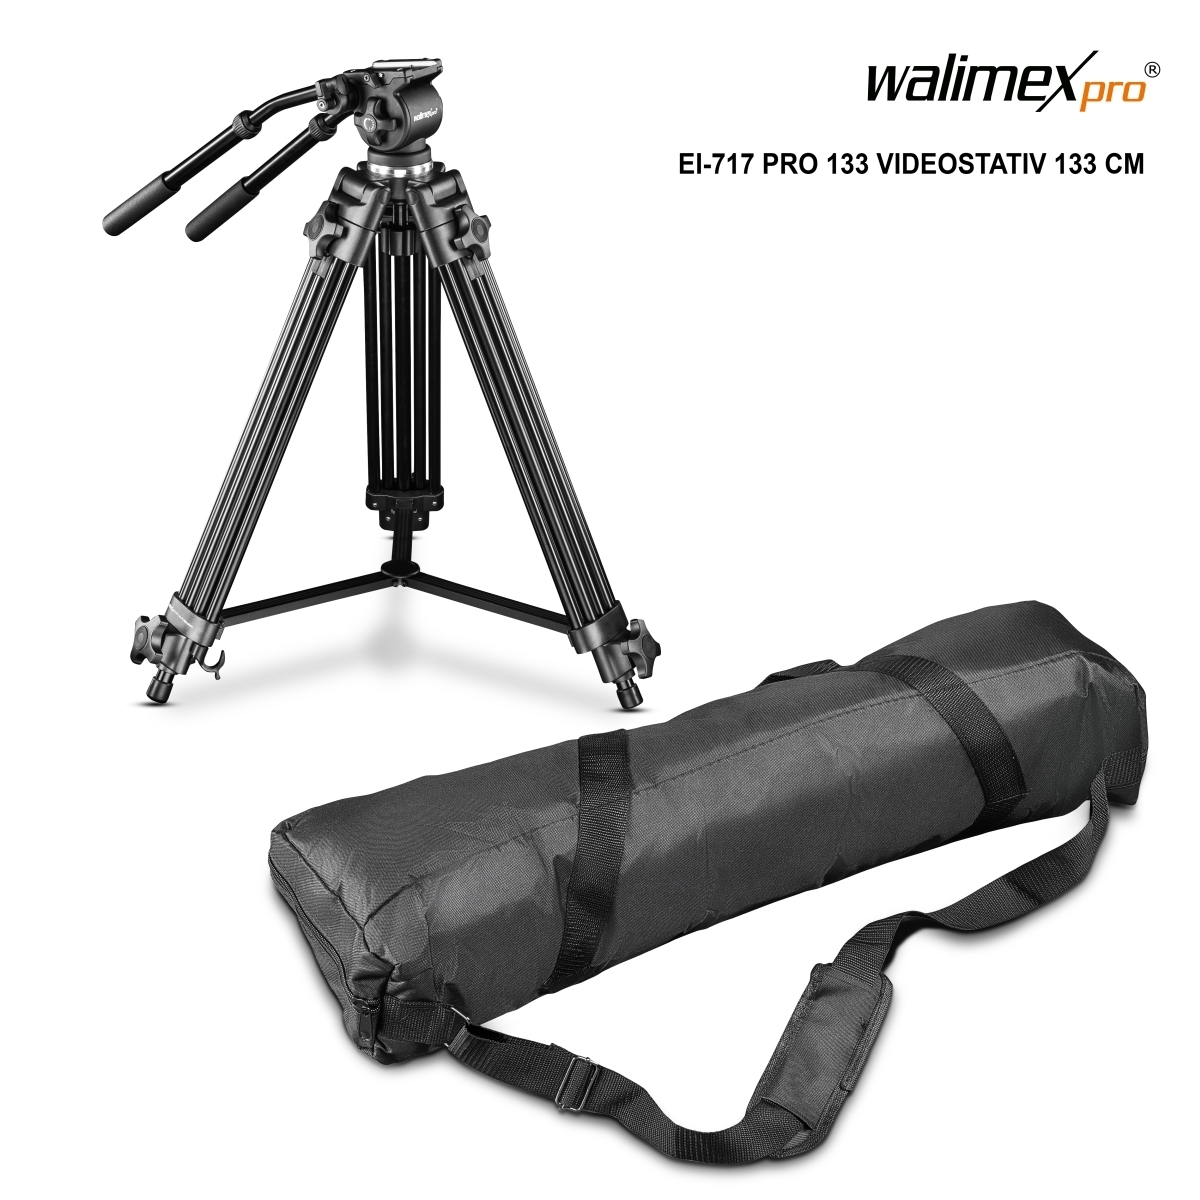 Walimex pro EI-717 Pro 133 Videostativ 133 cm mit...